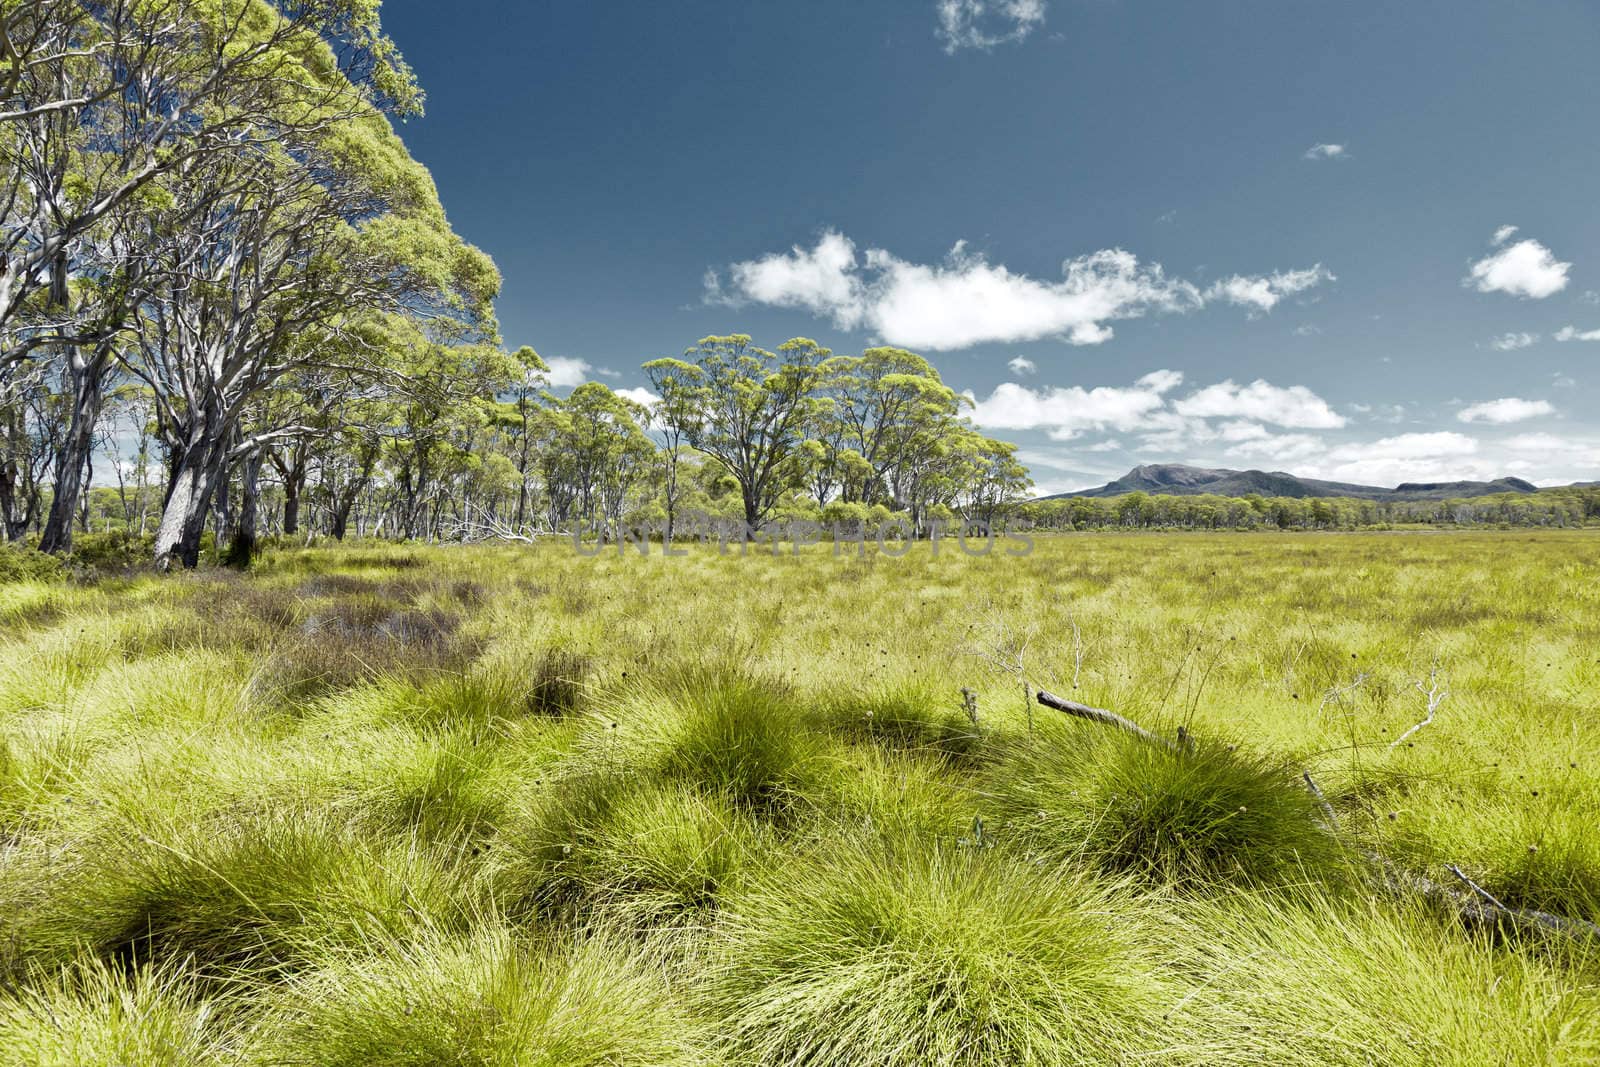 An image of a Tasmania green grass landscape